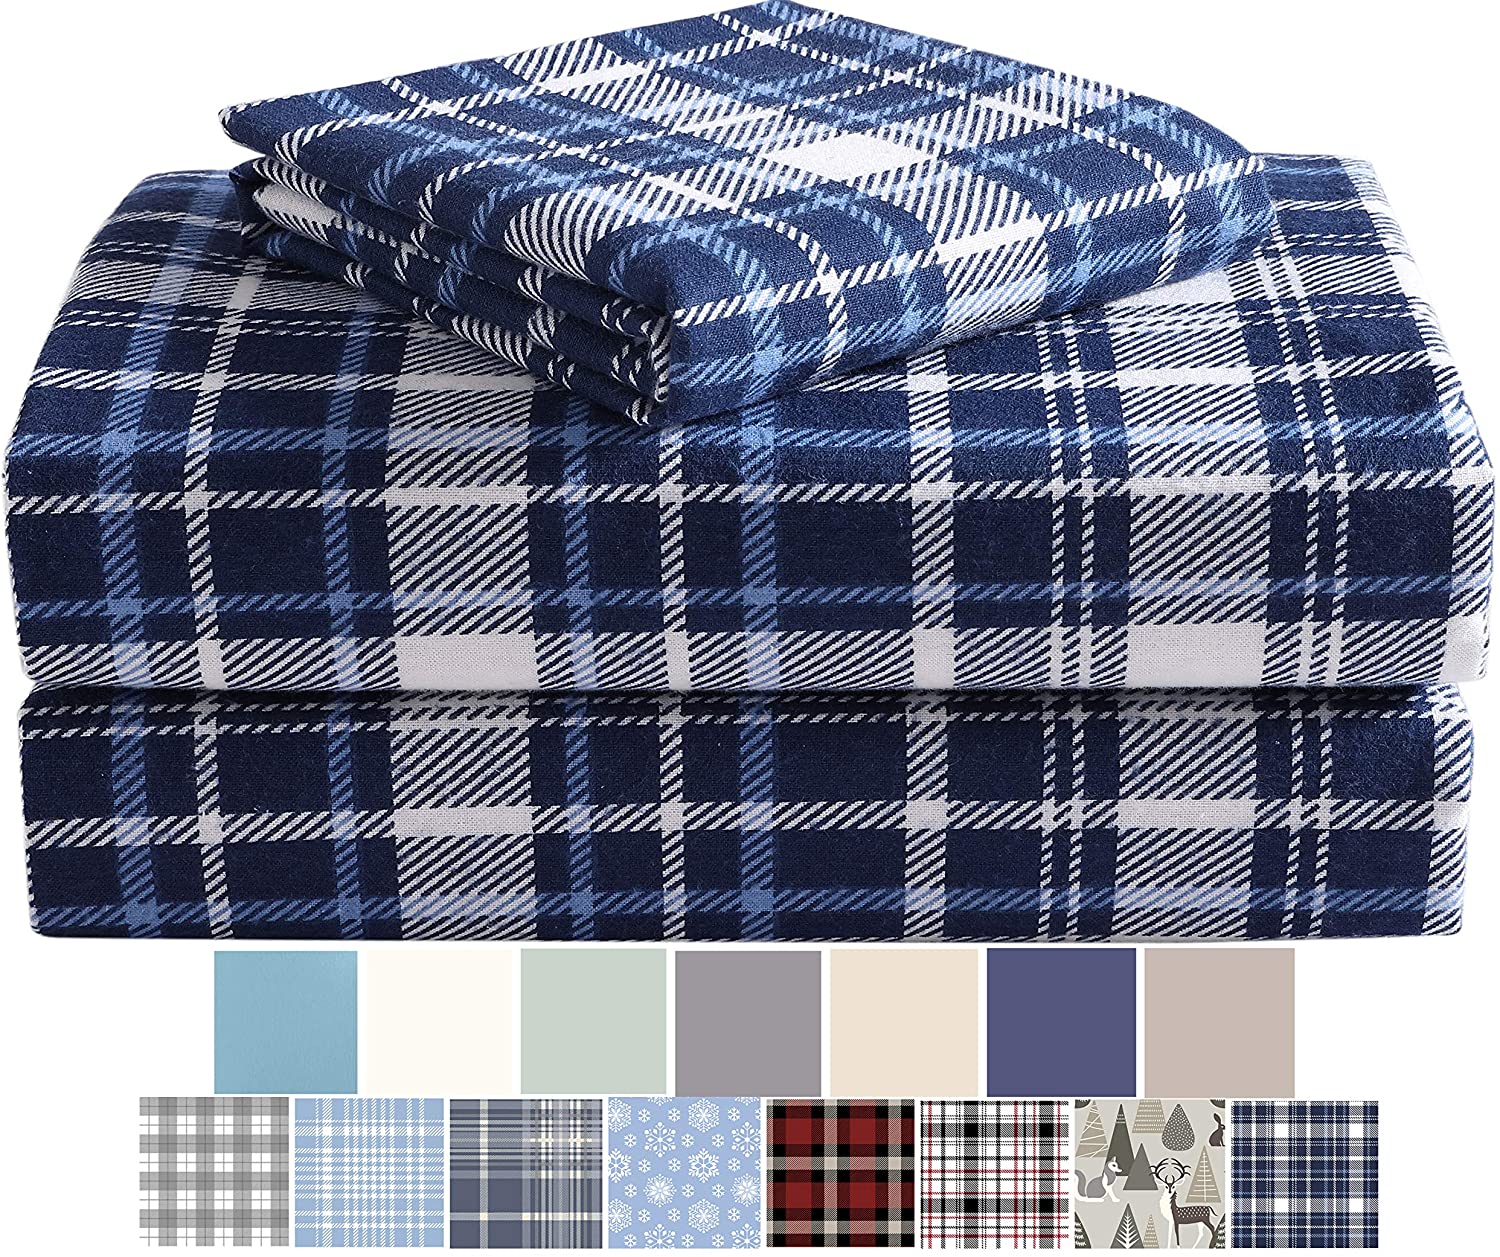 Morgan Home Cotton Turkish Flannel Sheets